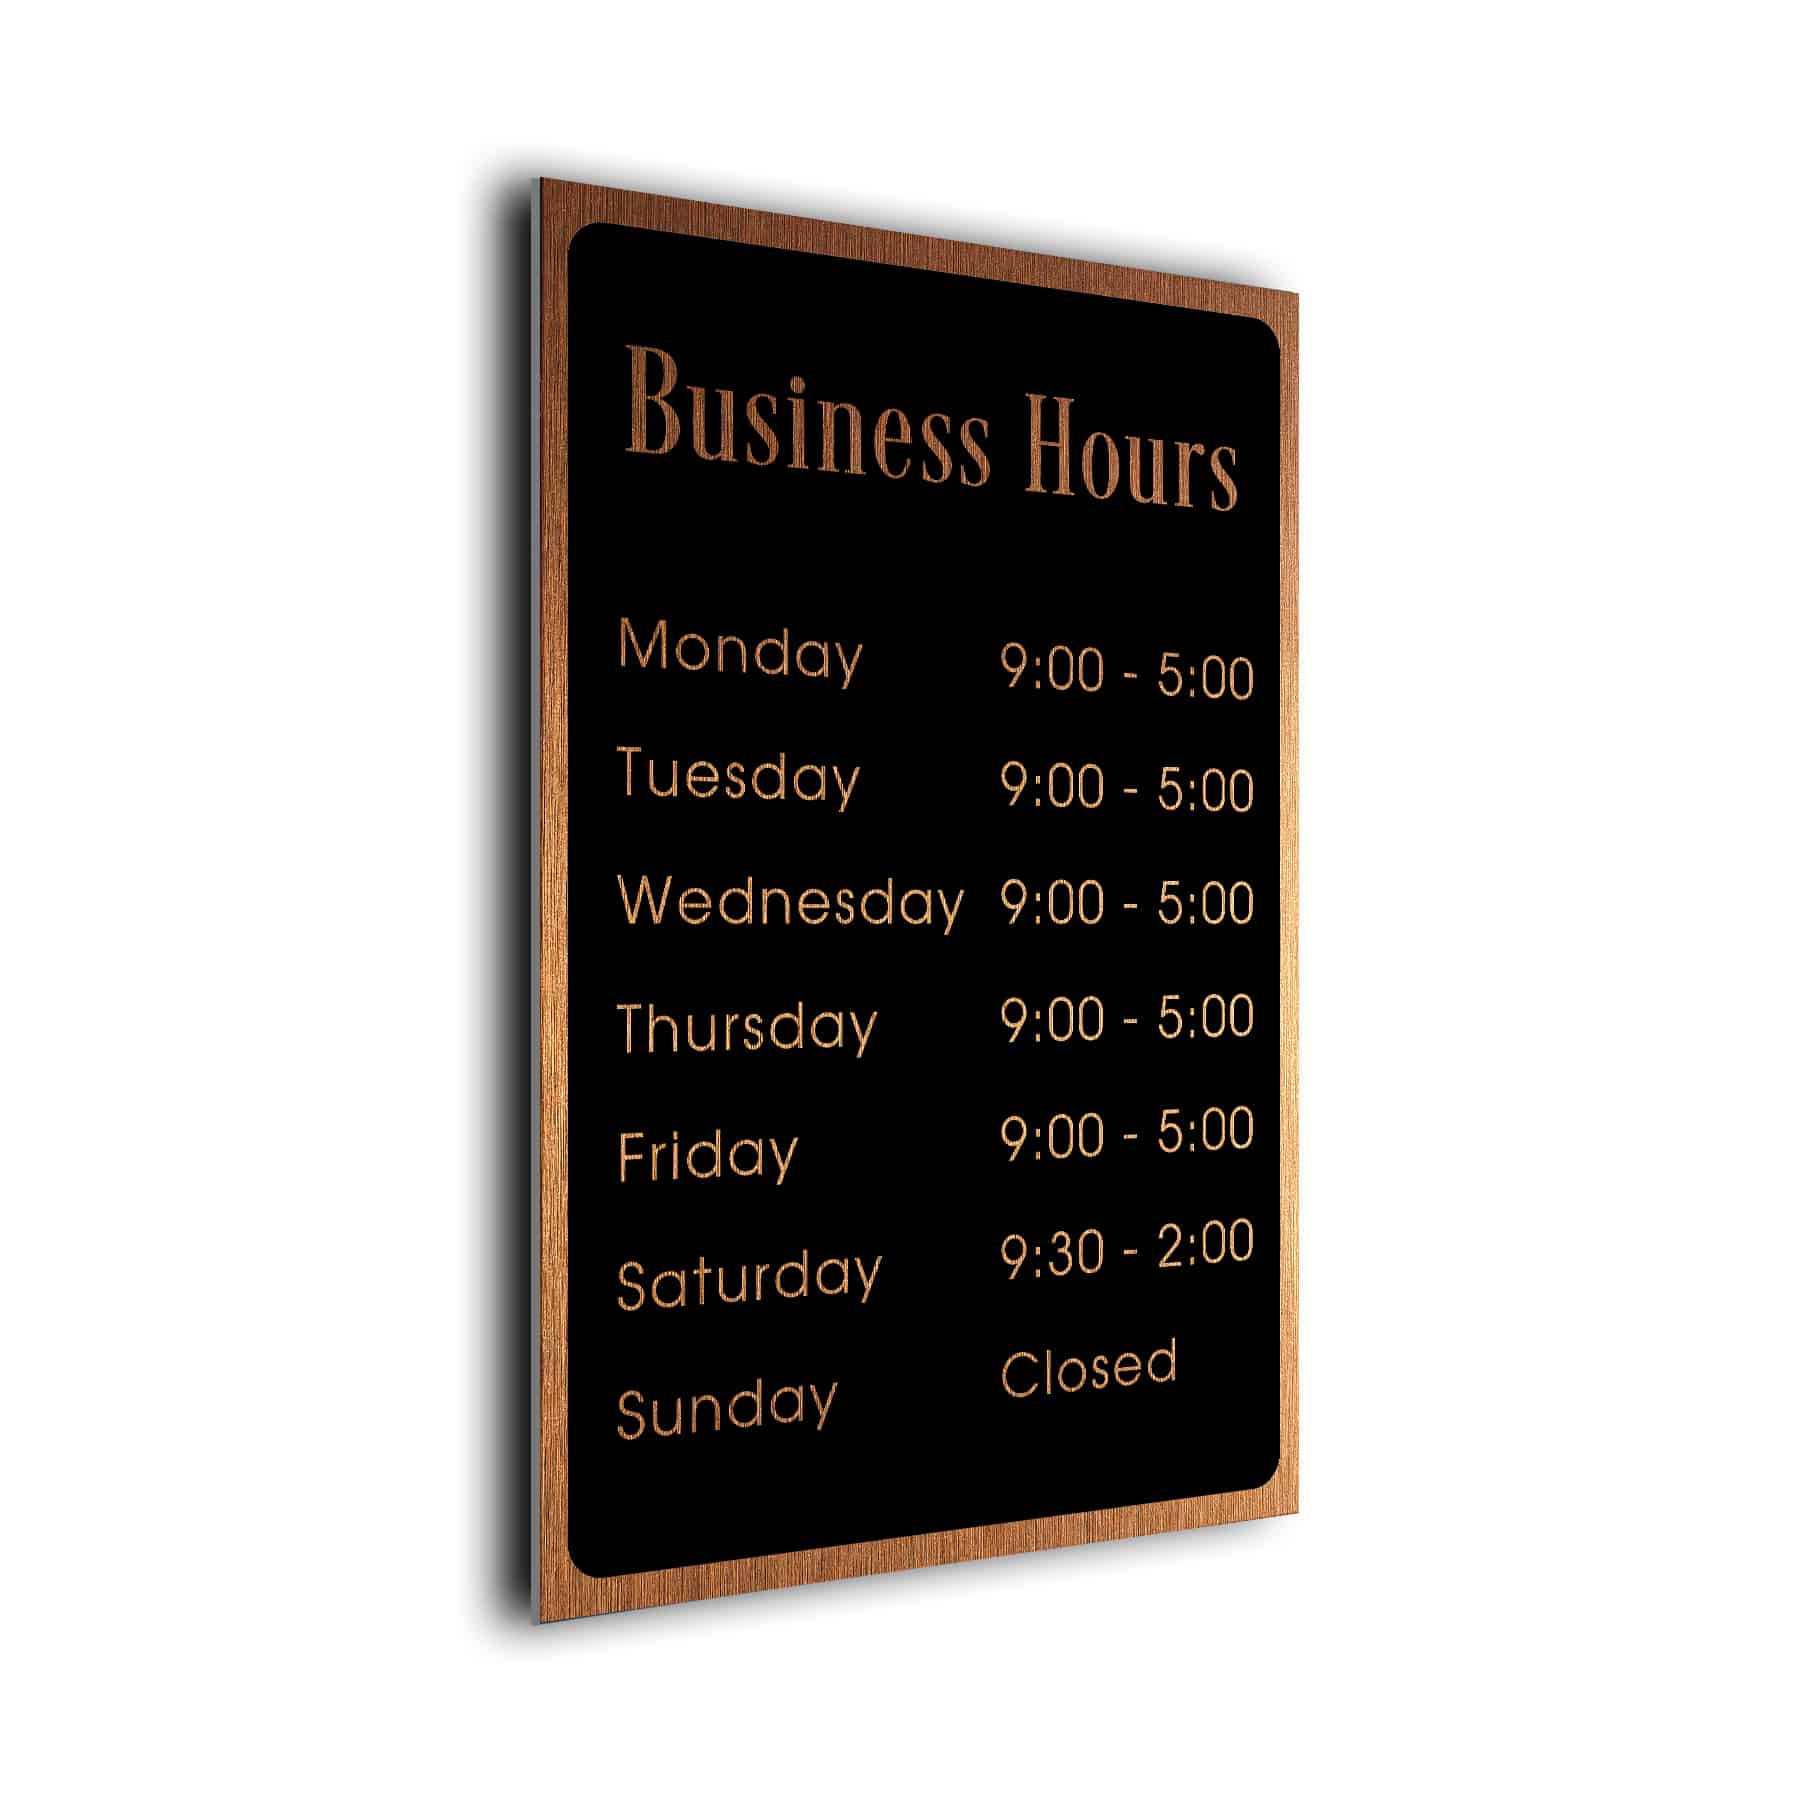 Business Hours Plaque